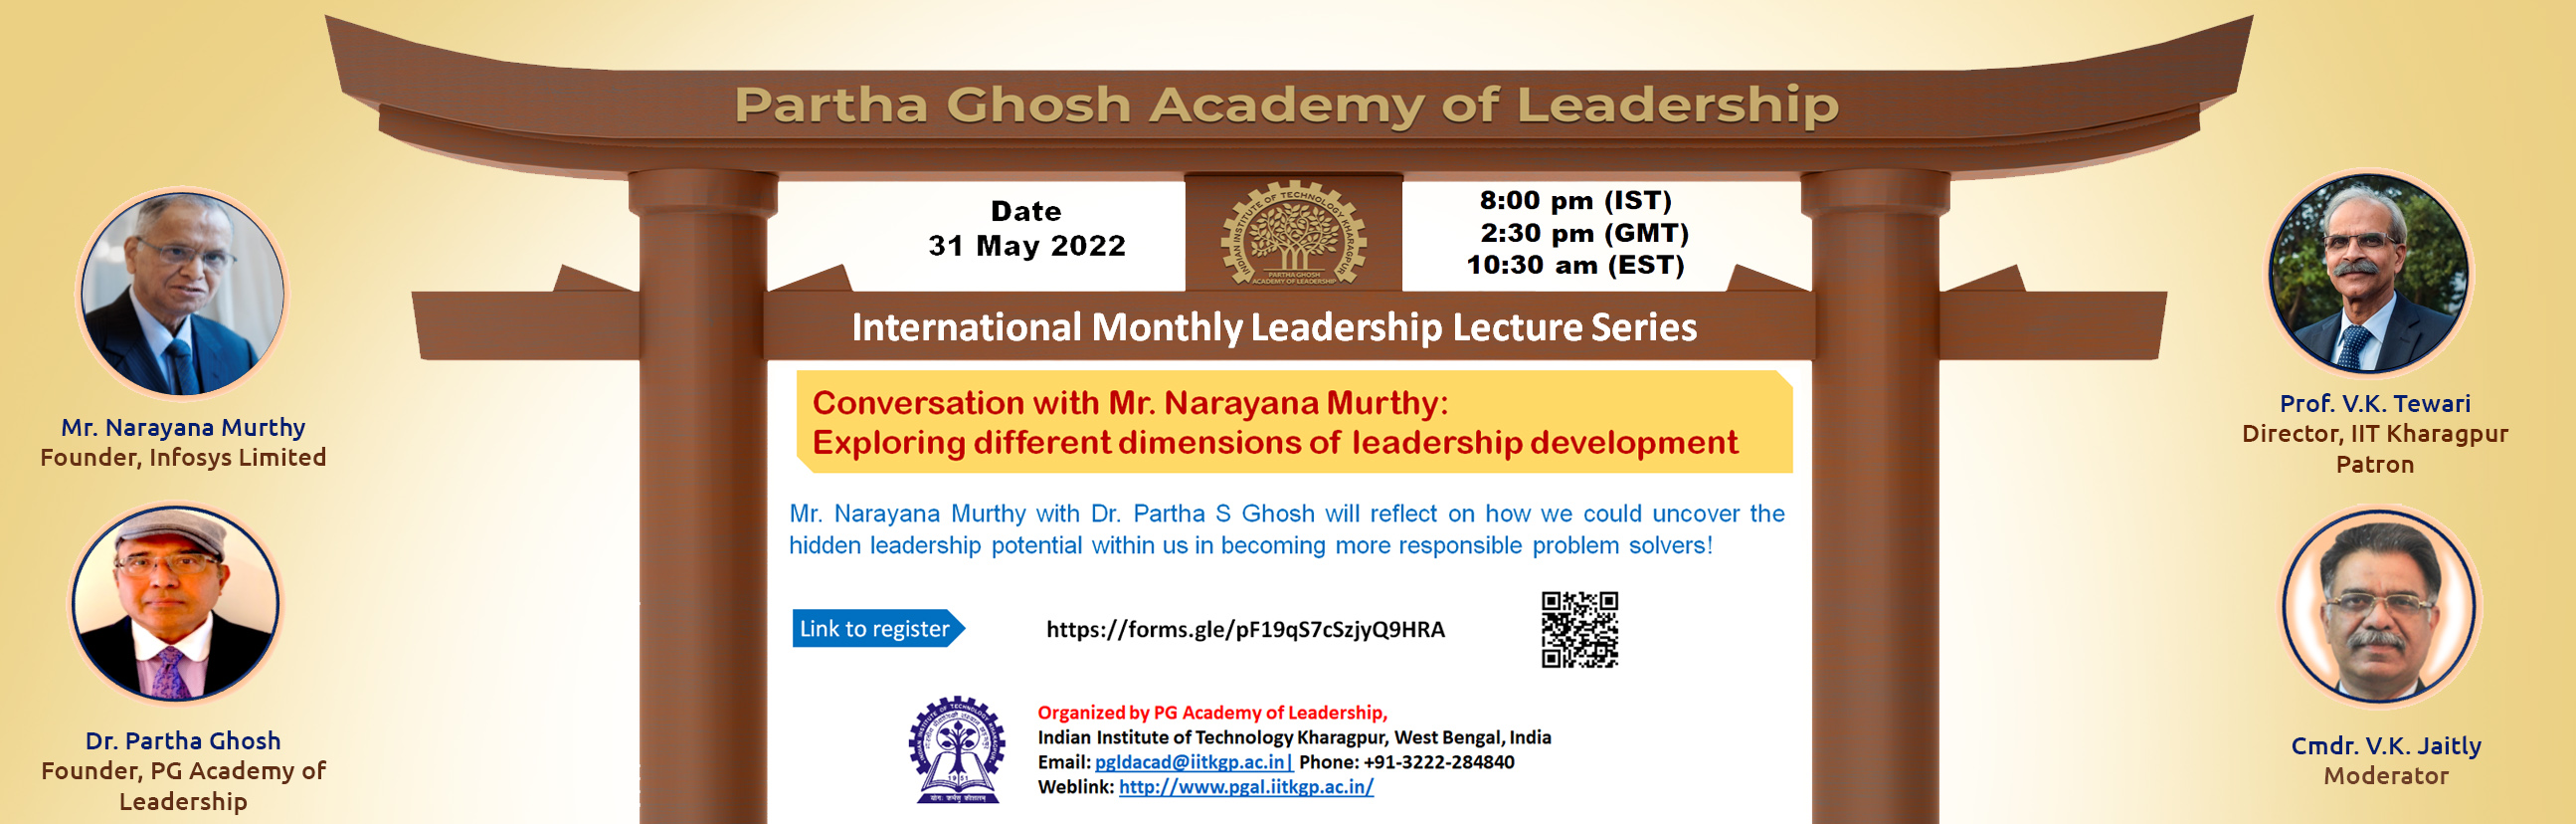 Partha Ghosh Academy of Leadership : 31 May 2022